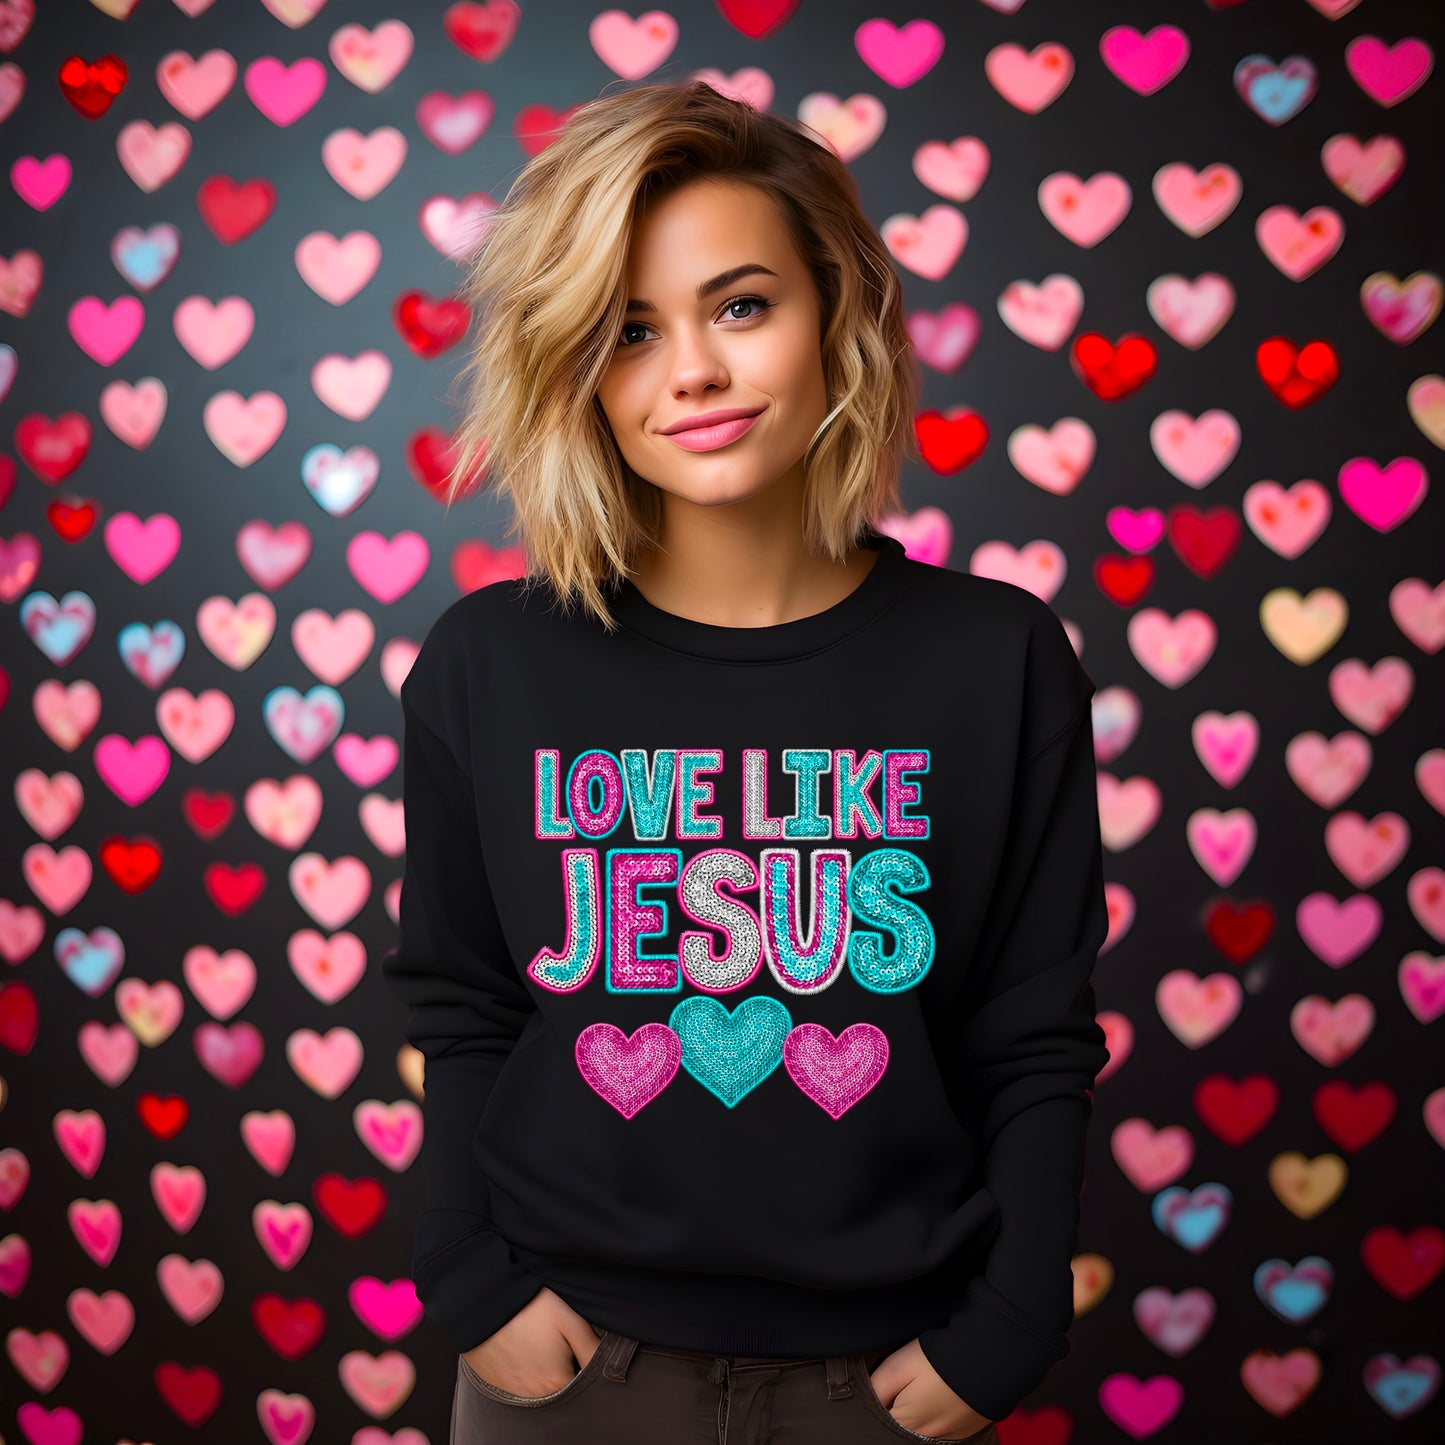 Love Like Jesus - Sweatshirt